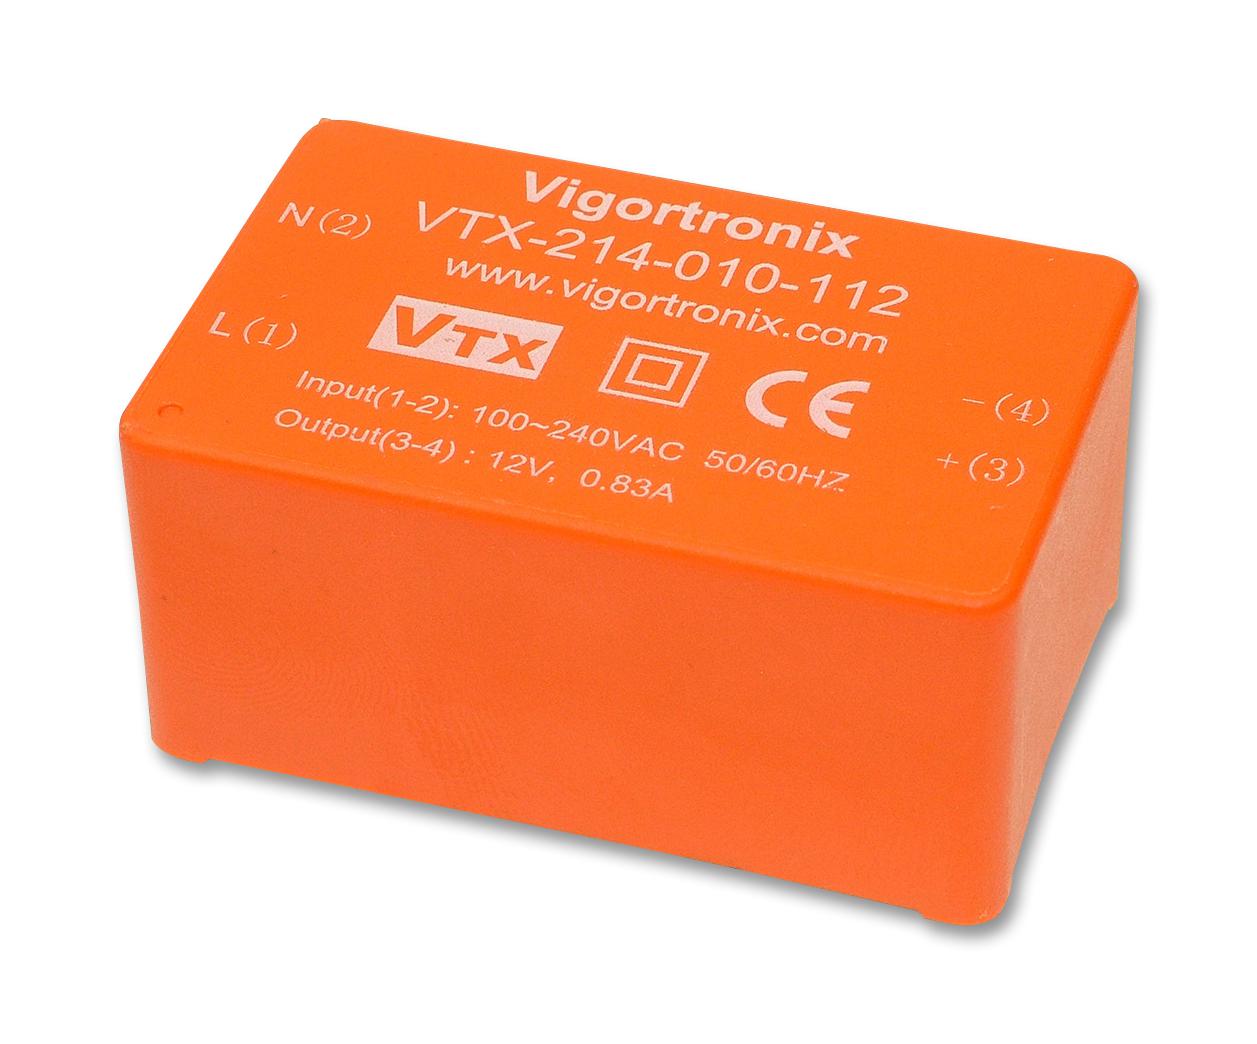 VTX-214-010-106 AC-DC CONV, FIXED, 1 O/P, 10W, 6V VIGORTRONIX